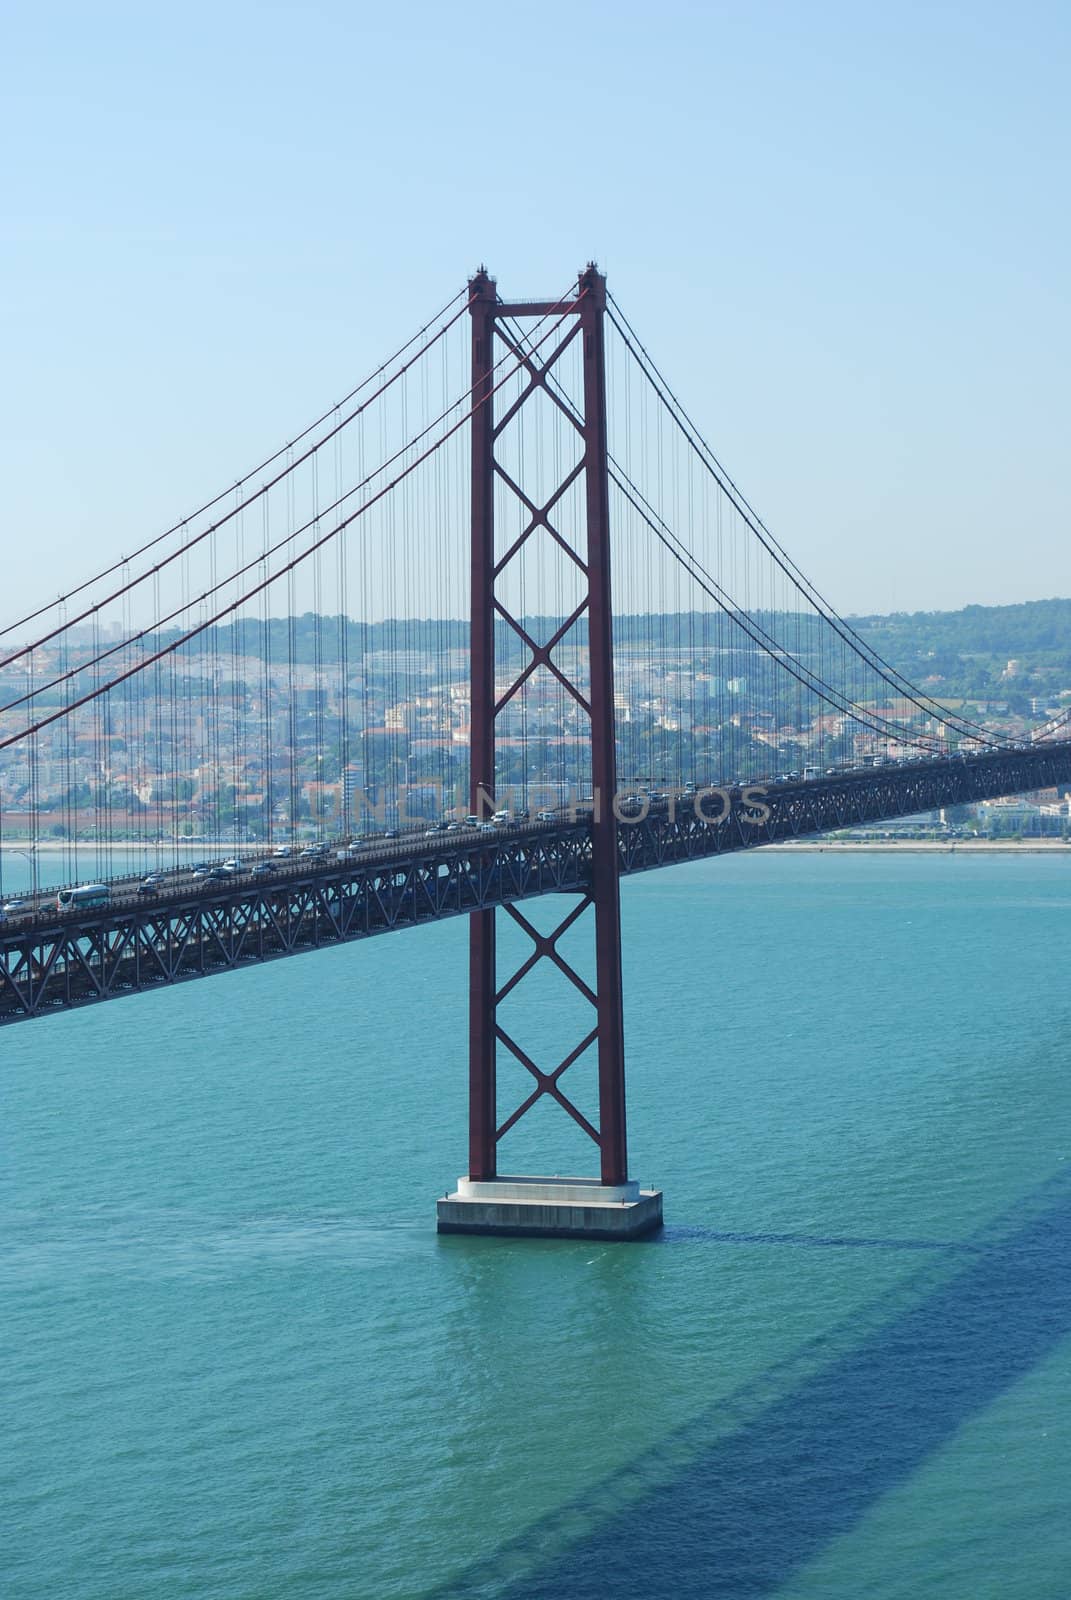 April 25th Bridge in Lisbon, Portugal by luissantos84